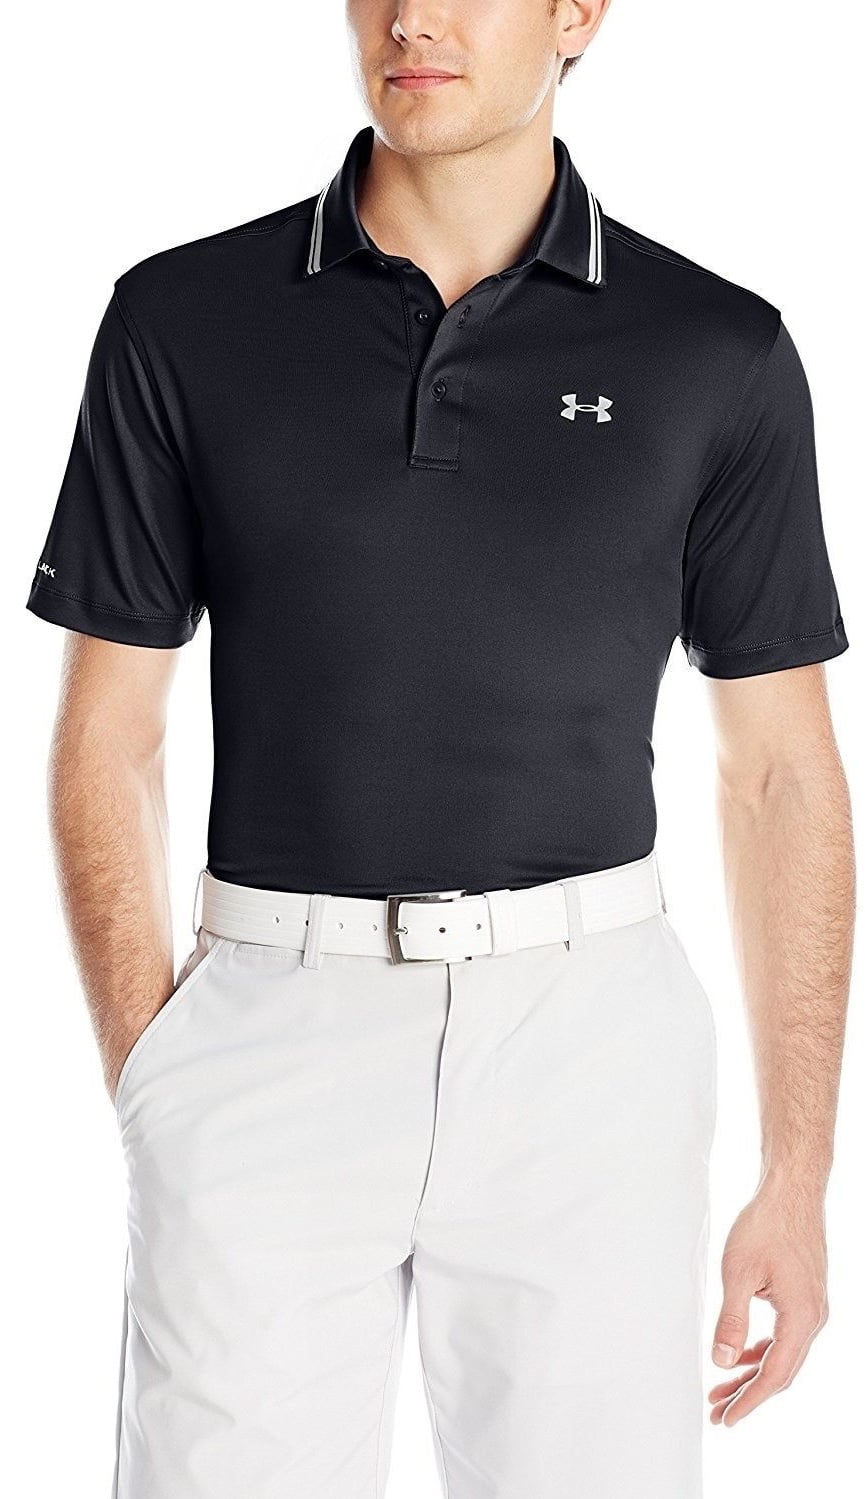 Pardon Werkloos Uitdaging Under Armour Heat Gear Men?s Coldblack Golf Short Sleeve Polo Shirt Black  Large - Walmart.com